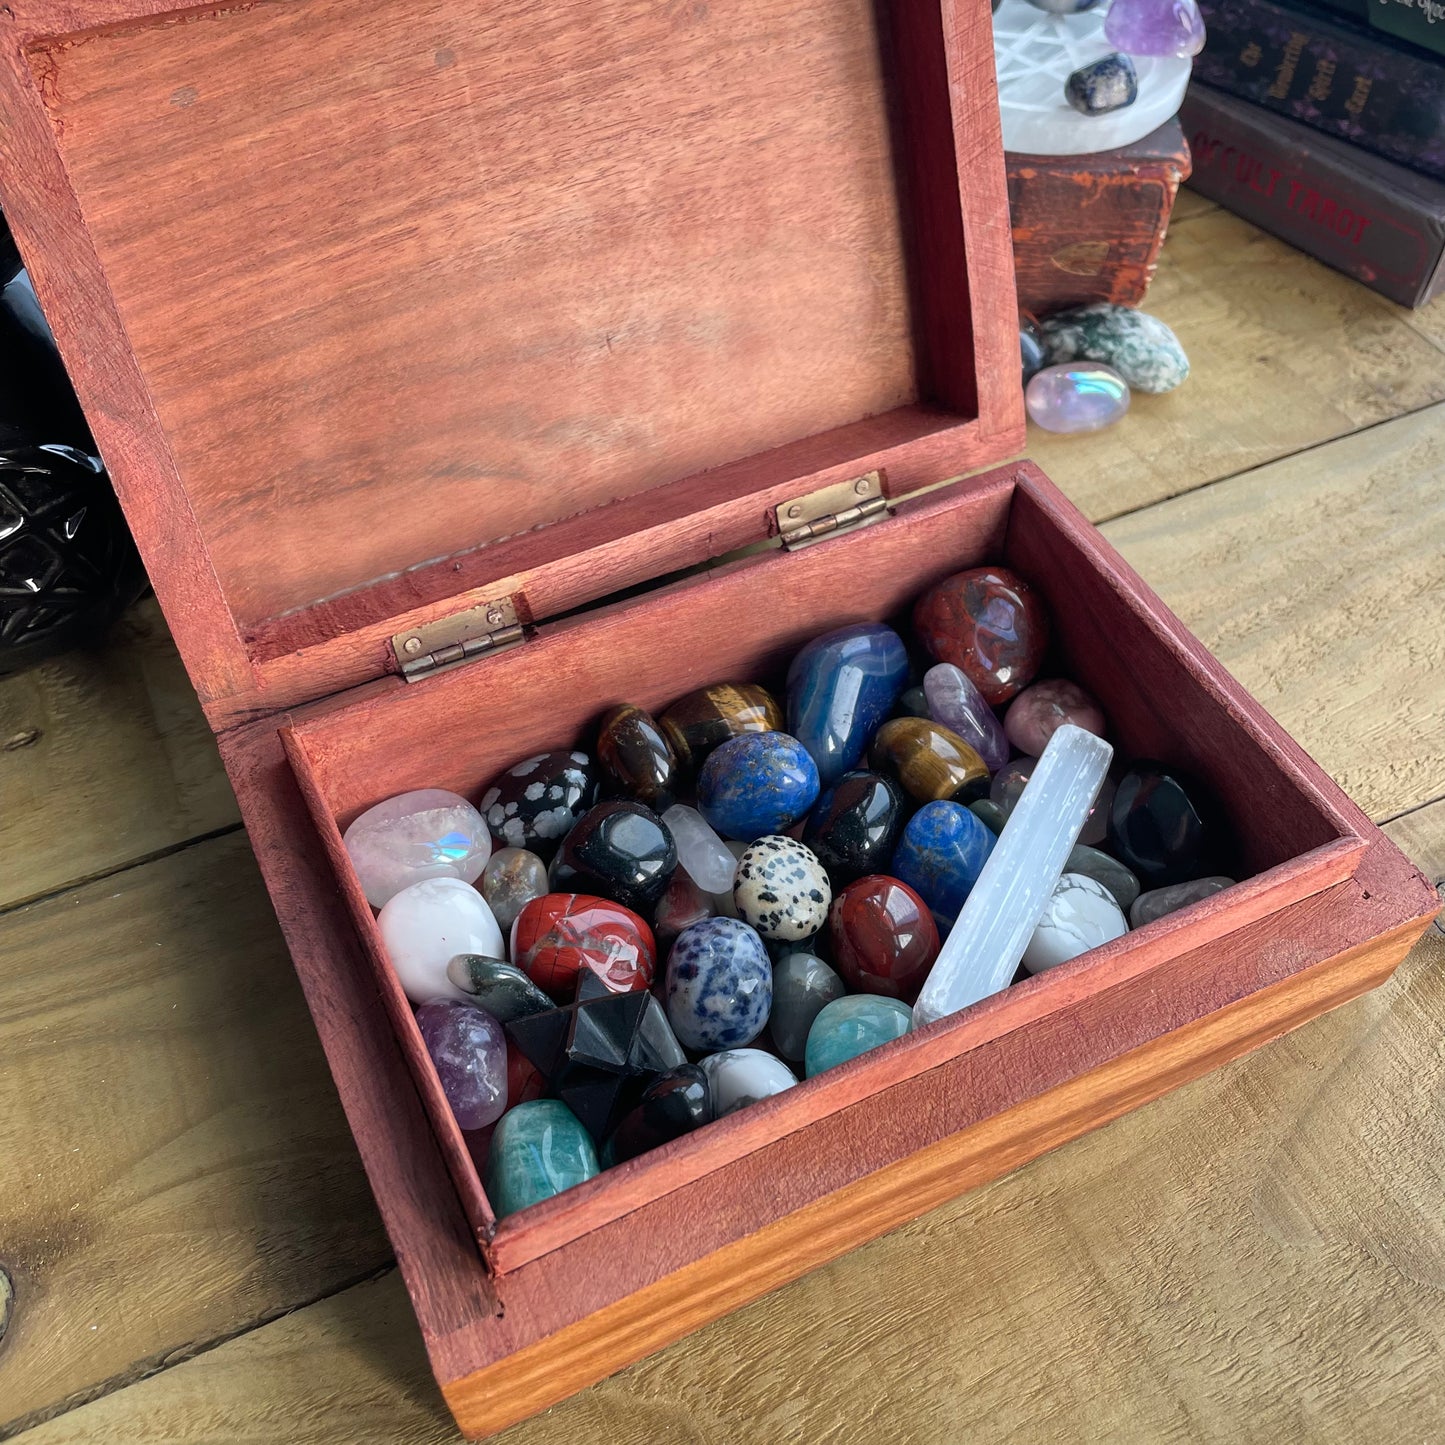 Pentagram Wooden Trinket Box